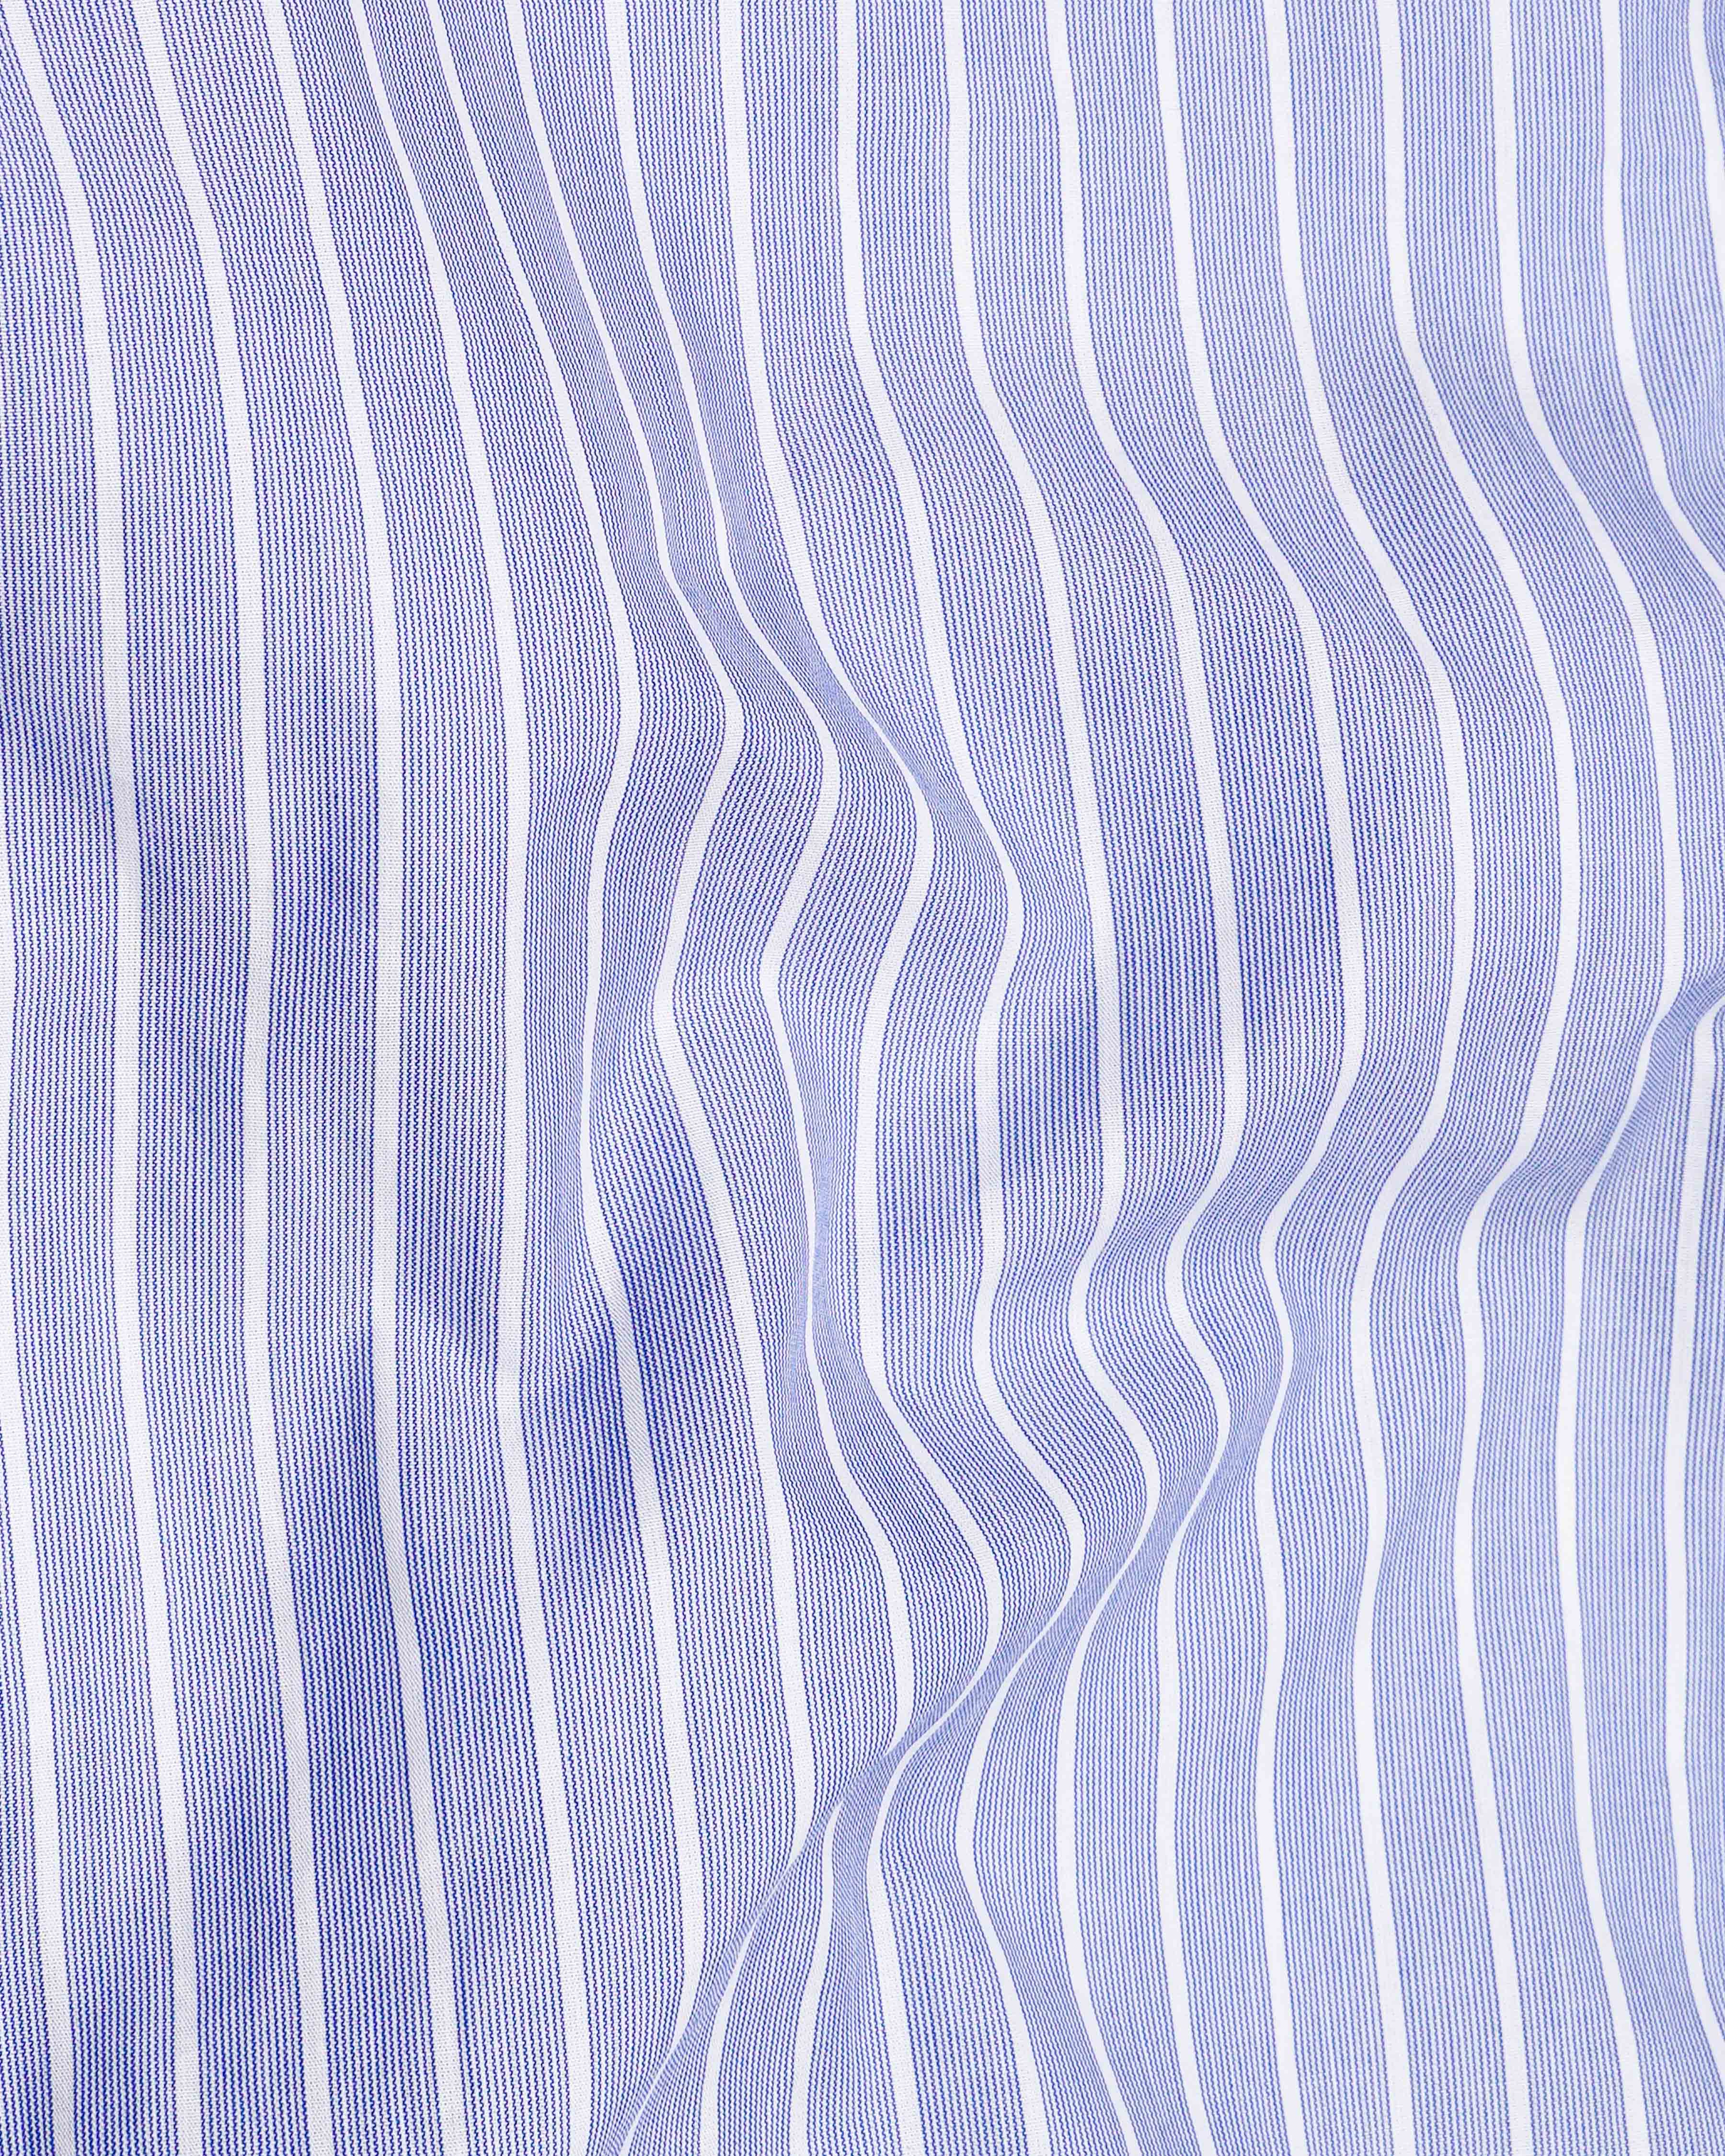 Cadet Blue With White Striped Premium Cotton Shirt 8043-BLE-38,8043-BLE-38,8043-BLE-39,8043-BLE-39,8043-BLE-40,8043-BLE-40,8043-BLE-42,8043-BLE-42,8043-BLE-44,8043-BLE-44,8043-BLE-46,8043-BLE-46,8043-BLE-48,8043-BLE-48,8043-BLE-50,8043-BLE-50,8043-BLE-52,8043-BLE-52